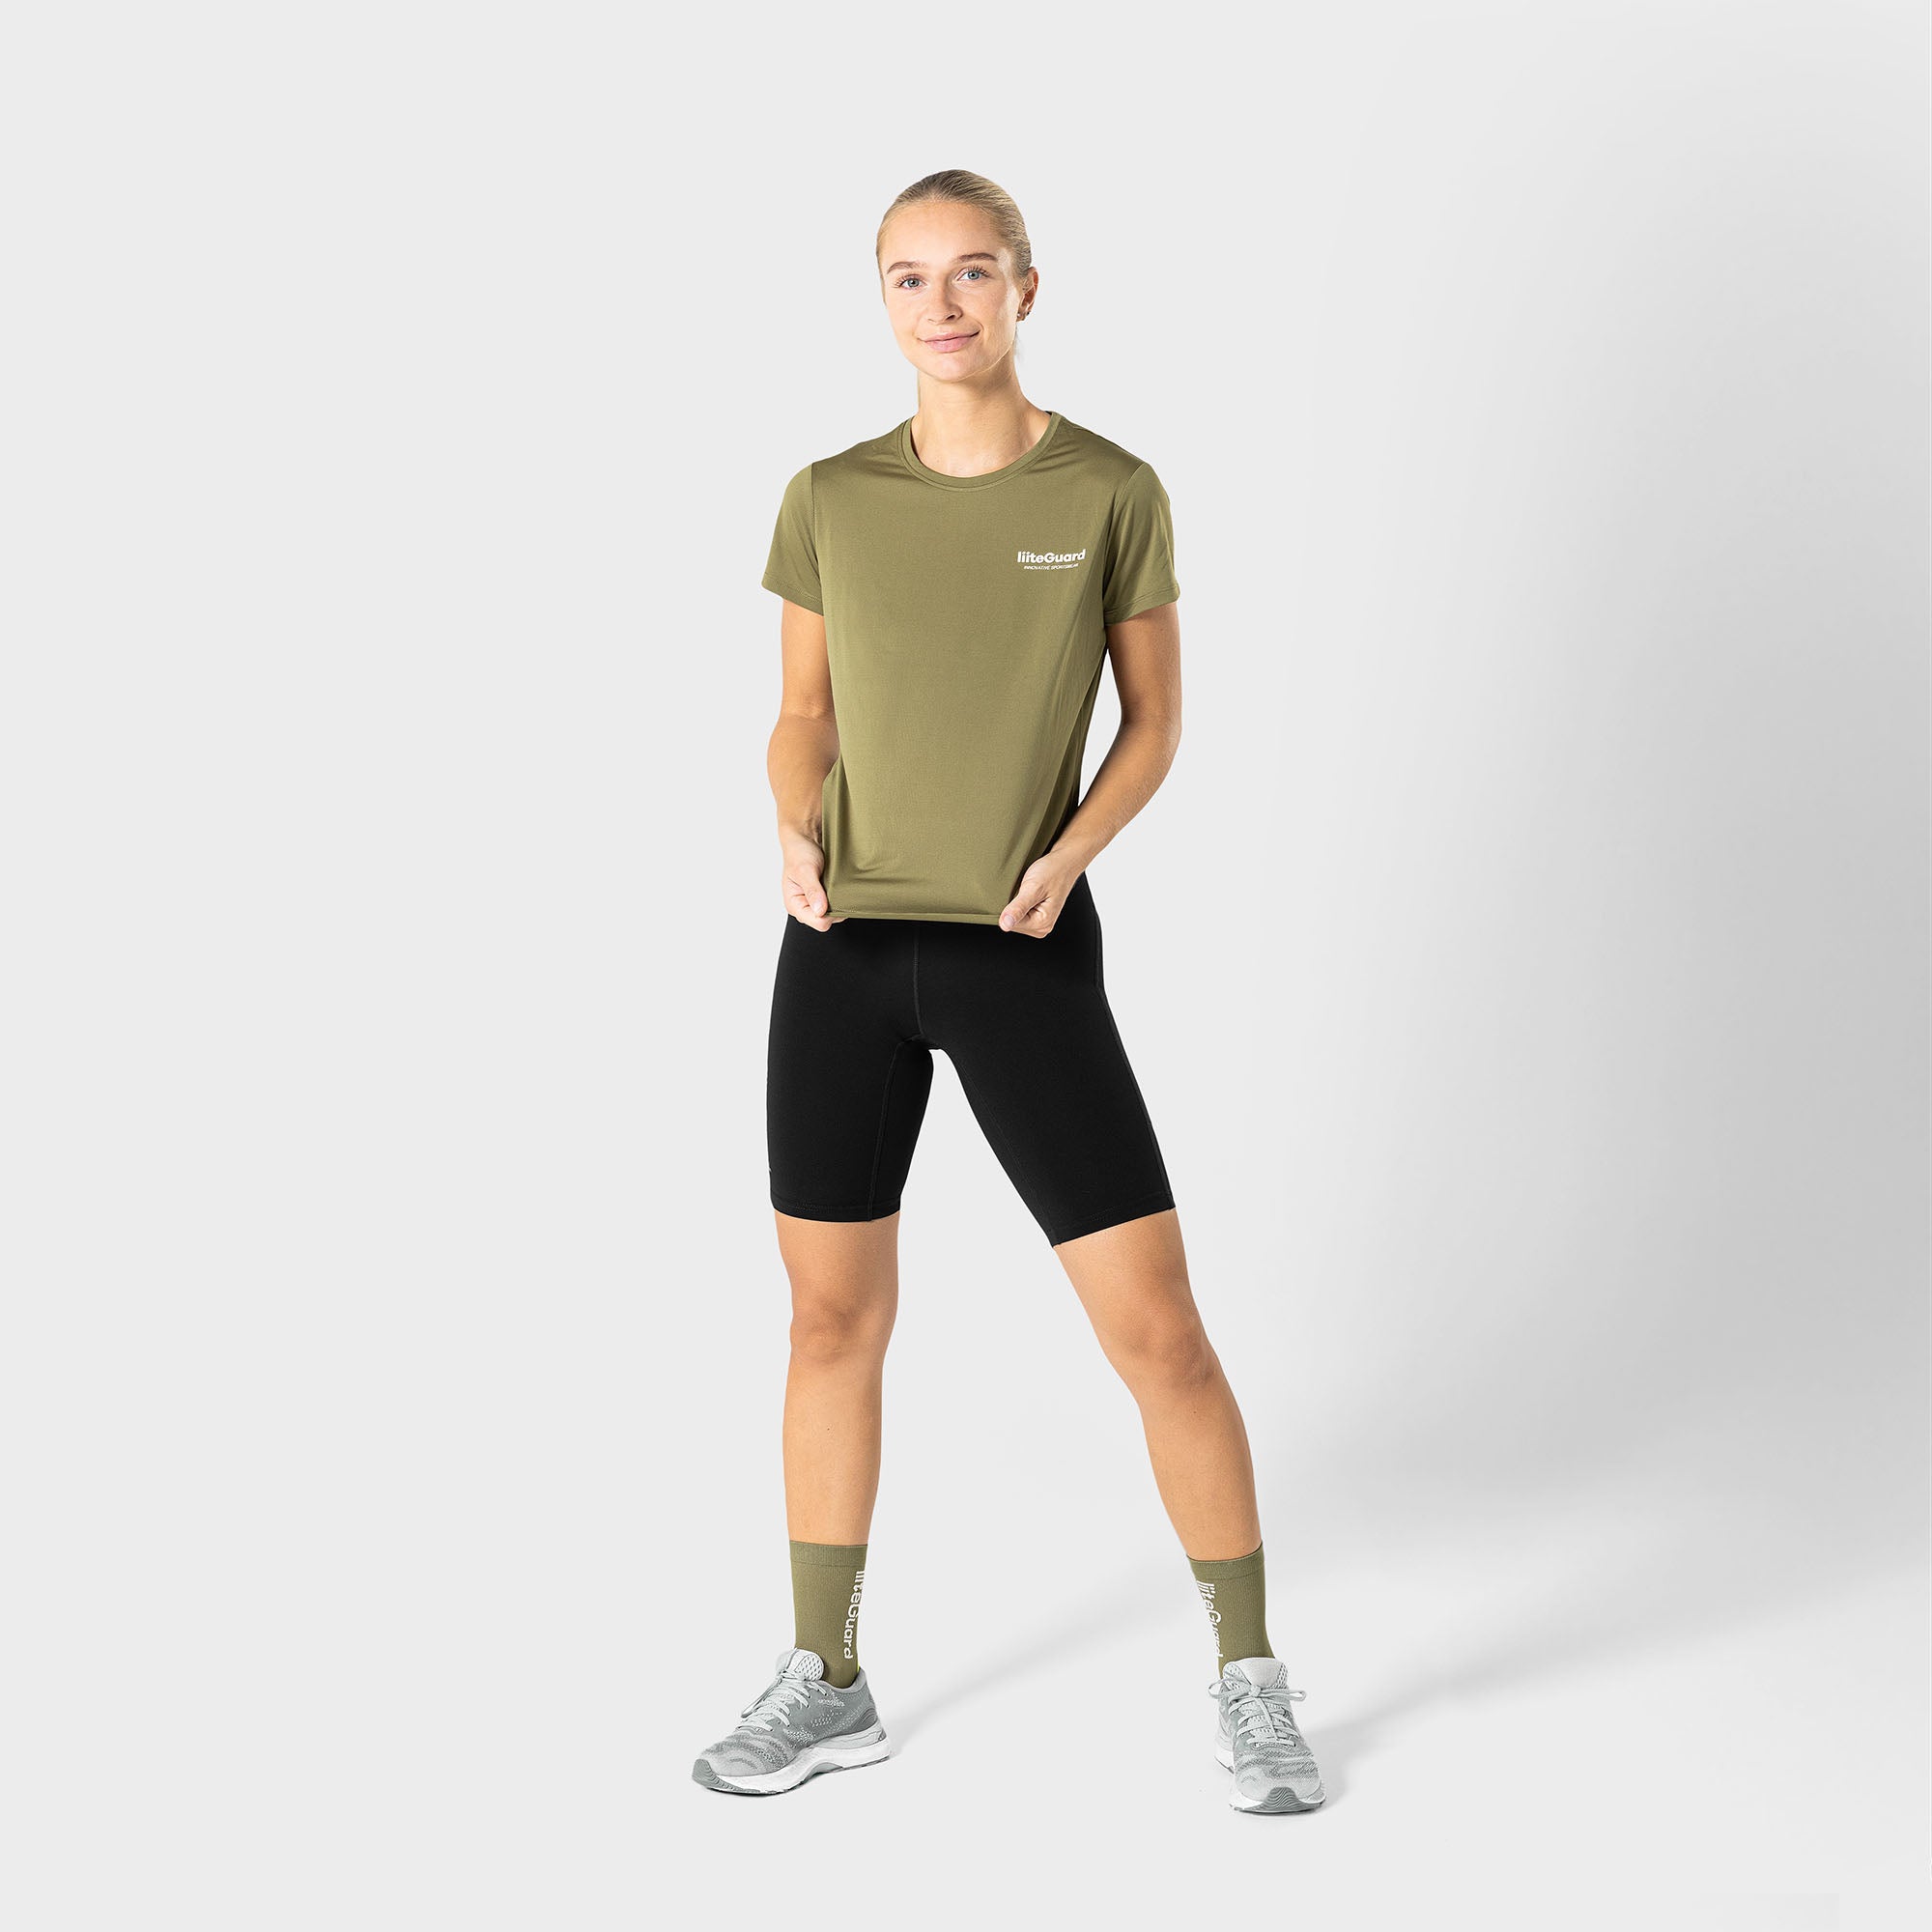 Liiteguard GROUND-TECH T-SHIRT (WOMEN) T-shirts Dusty Green